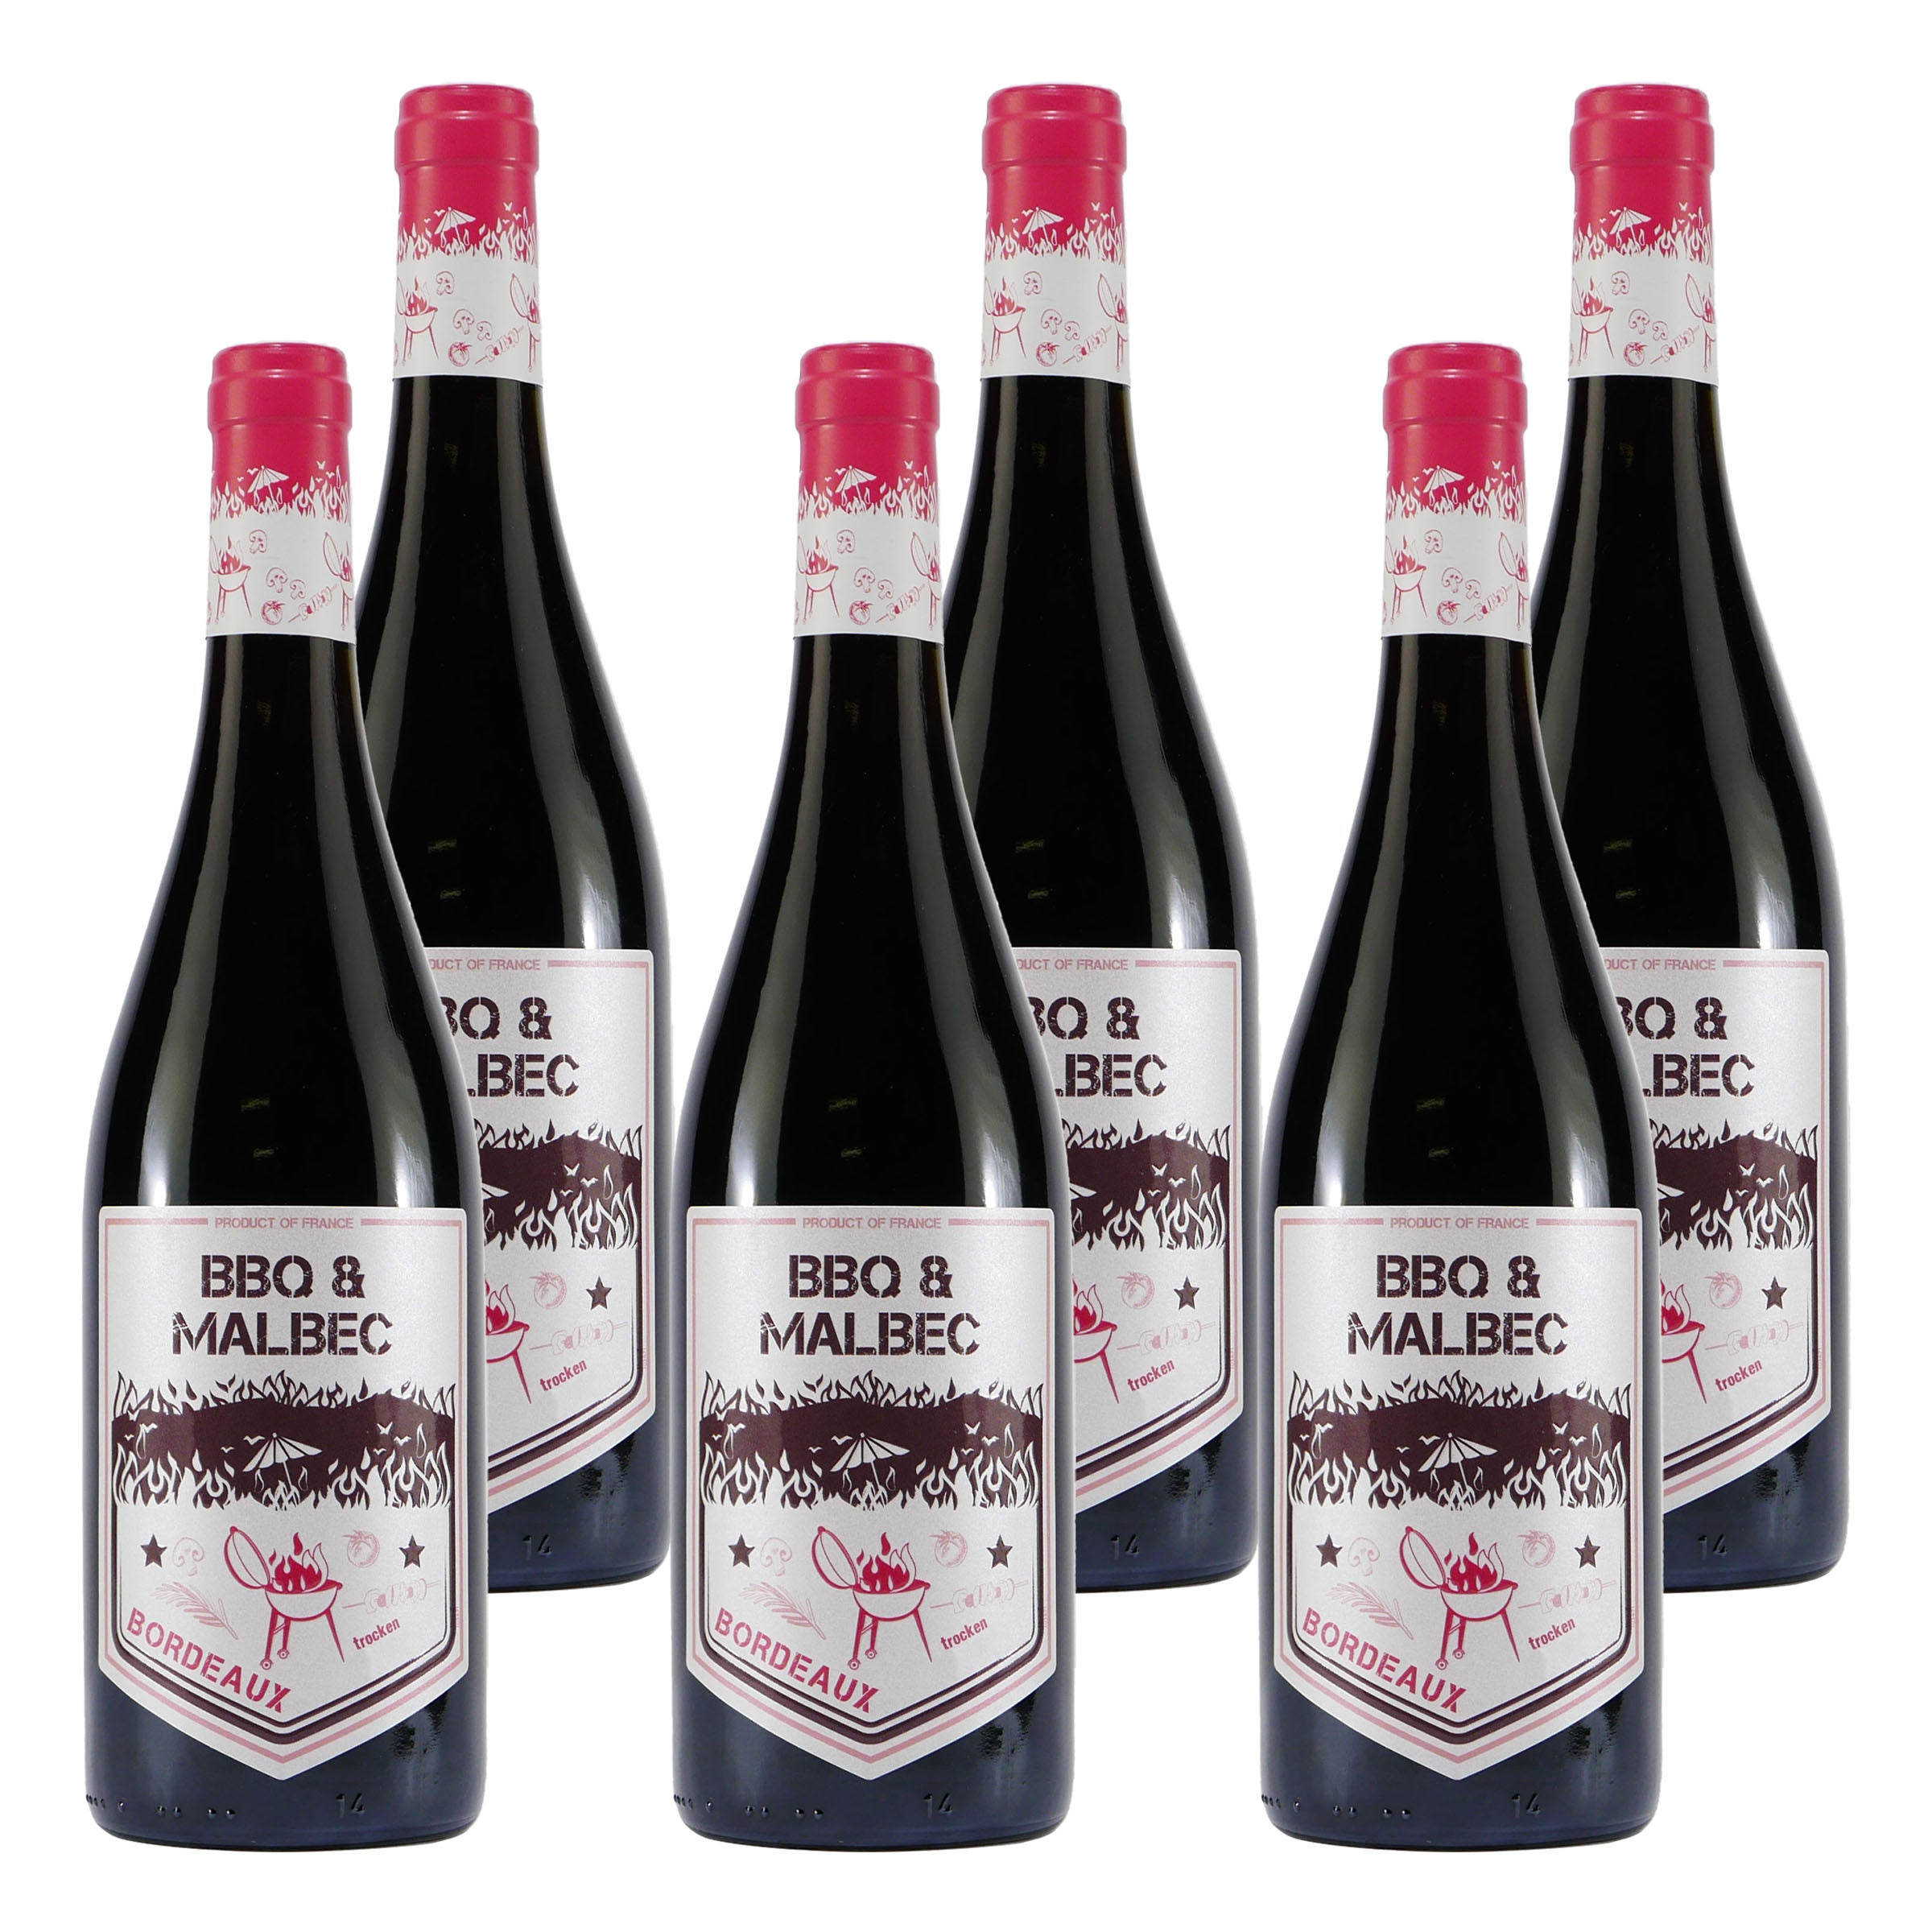 BBQ & Malbec Bordeaux AOP Grillabende für Kombination -trocken- Perfekte